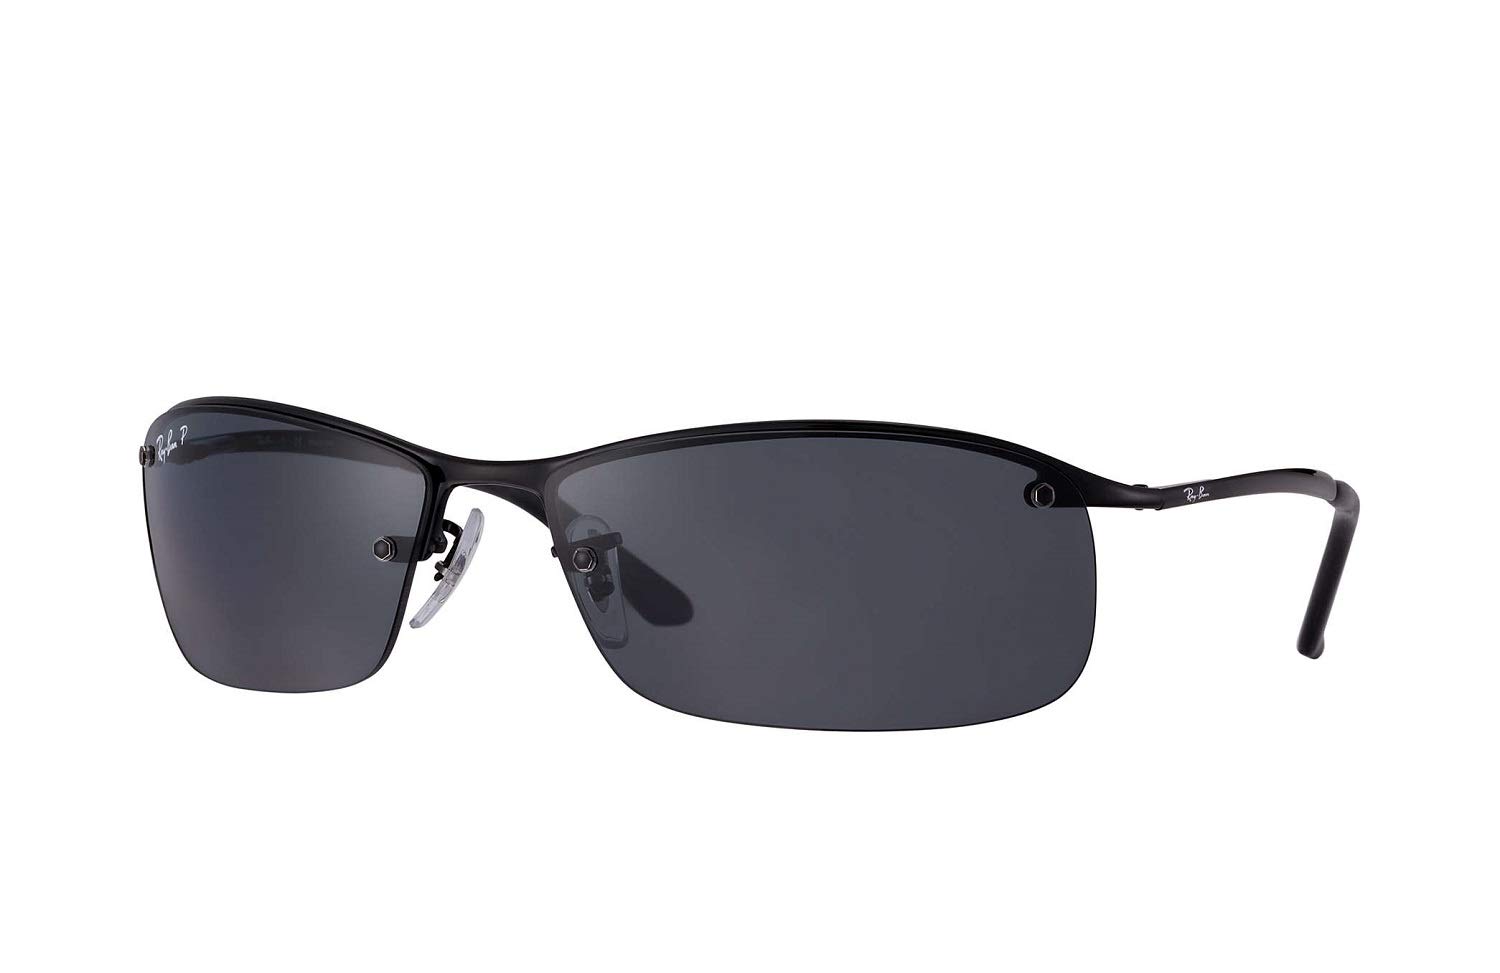 Ray-Ban Men's RB3183 Sunglasses (Black Frame, Solid Black Lens)